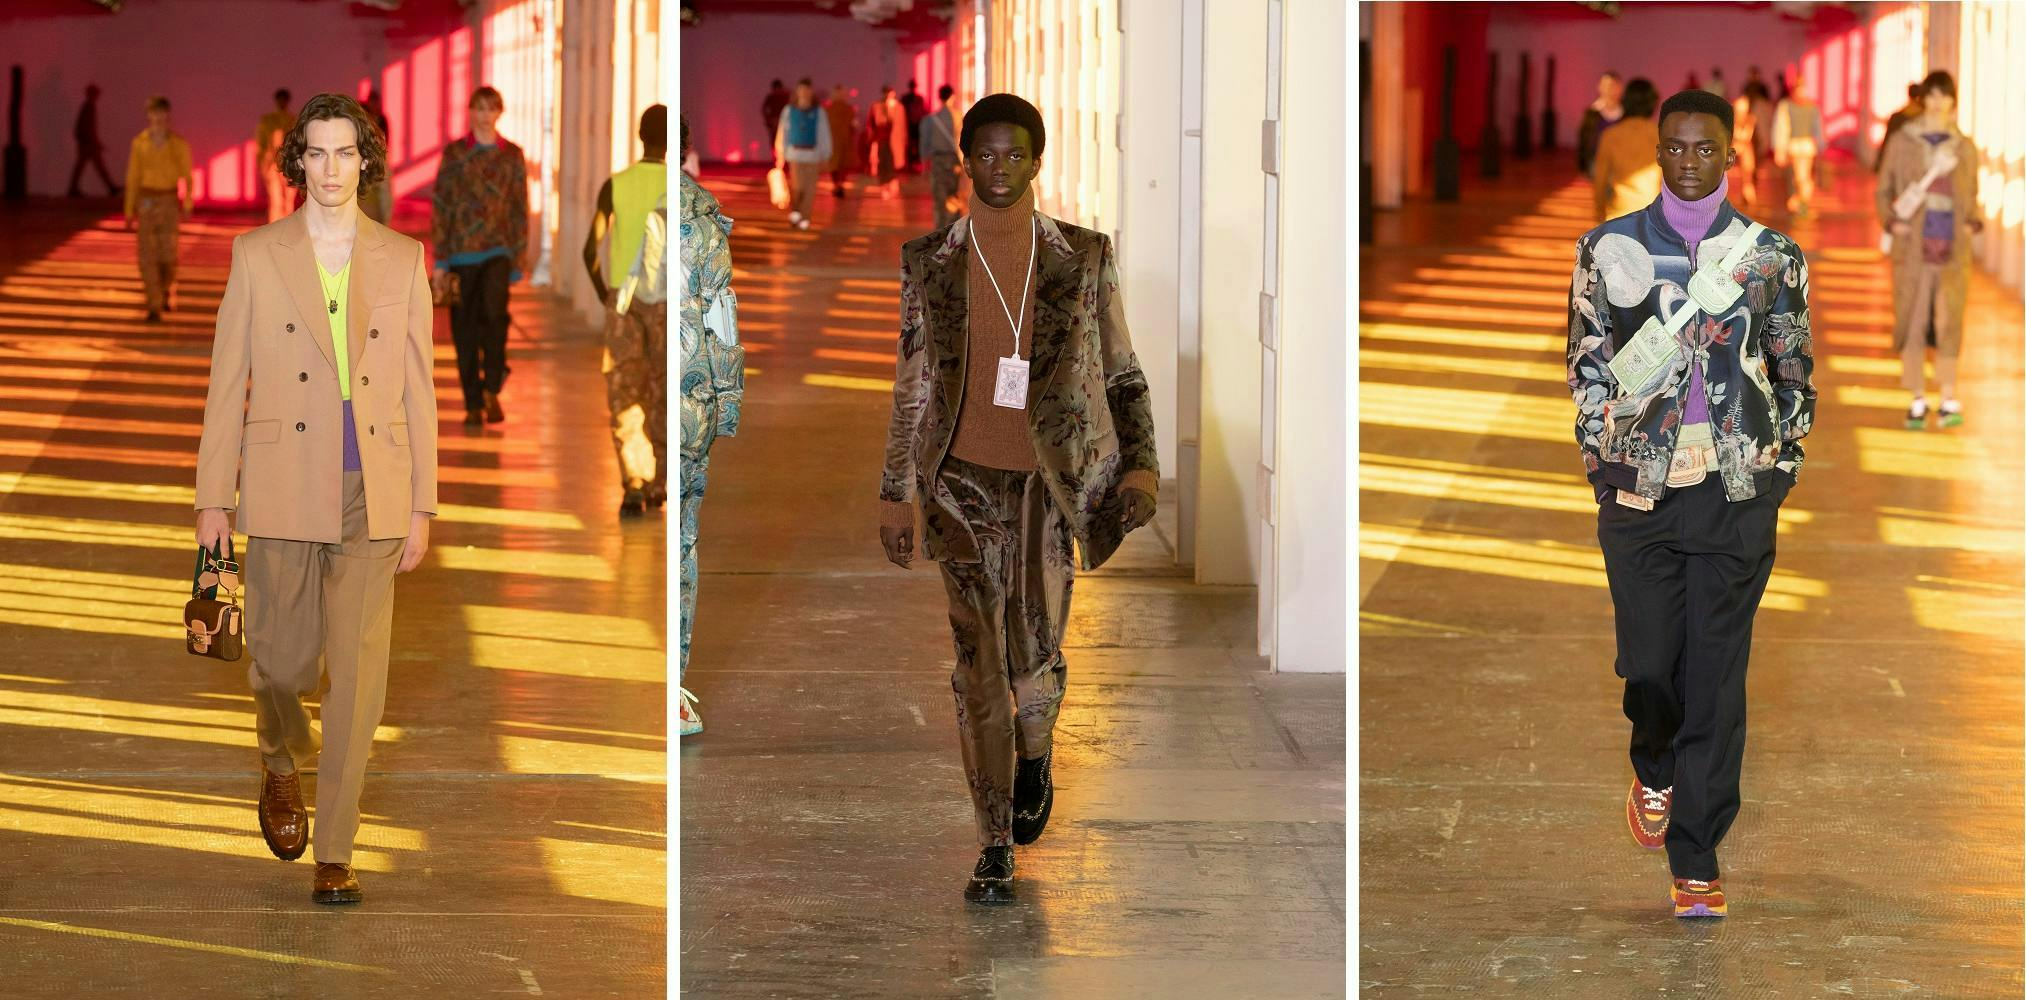 person human flooring clothing apparel fashion runway sleeve corridor